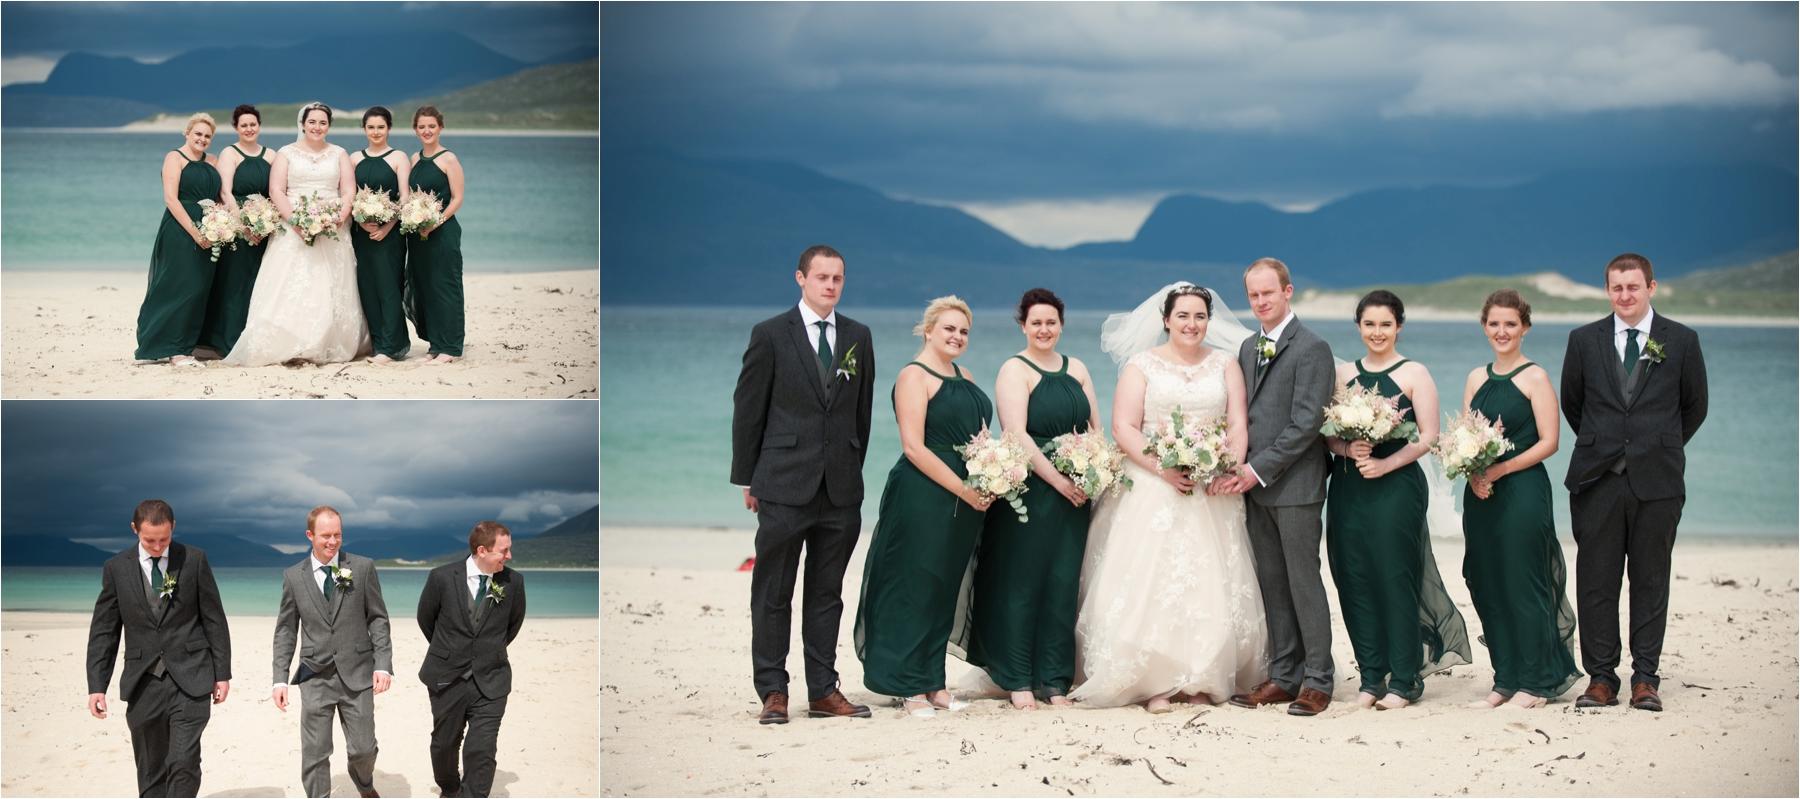 isle of harris group wedding shots at horgabost beach photograph